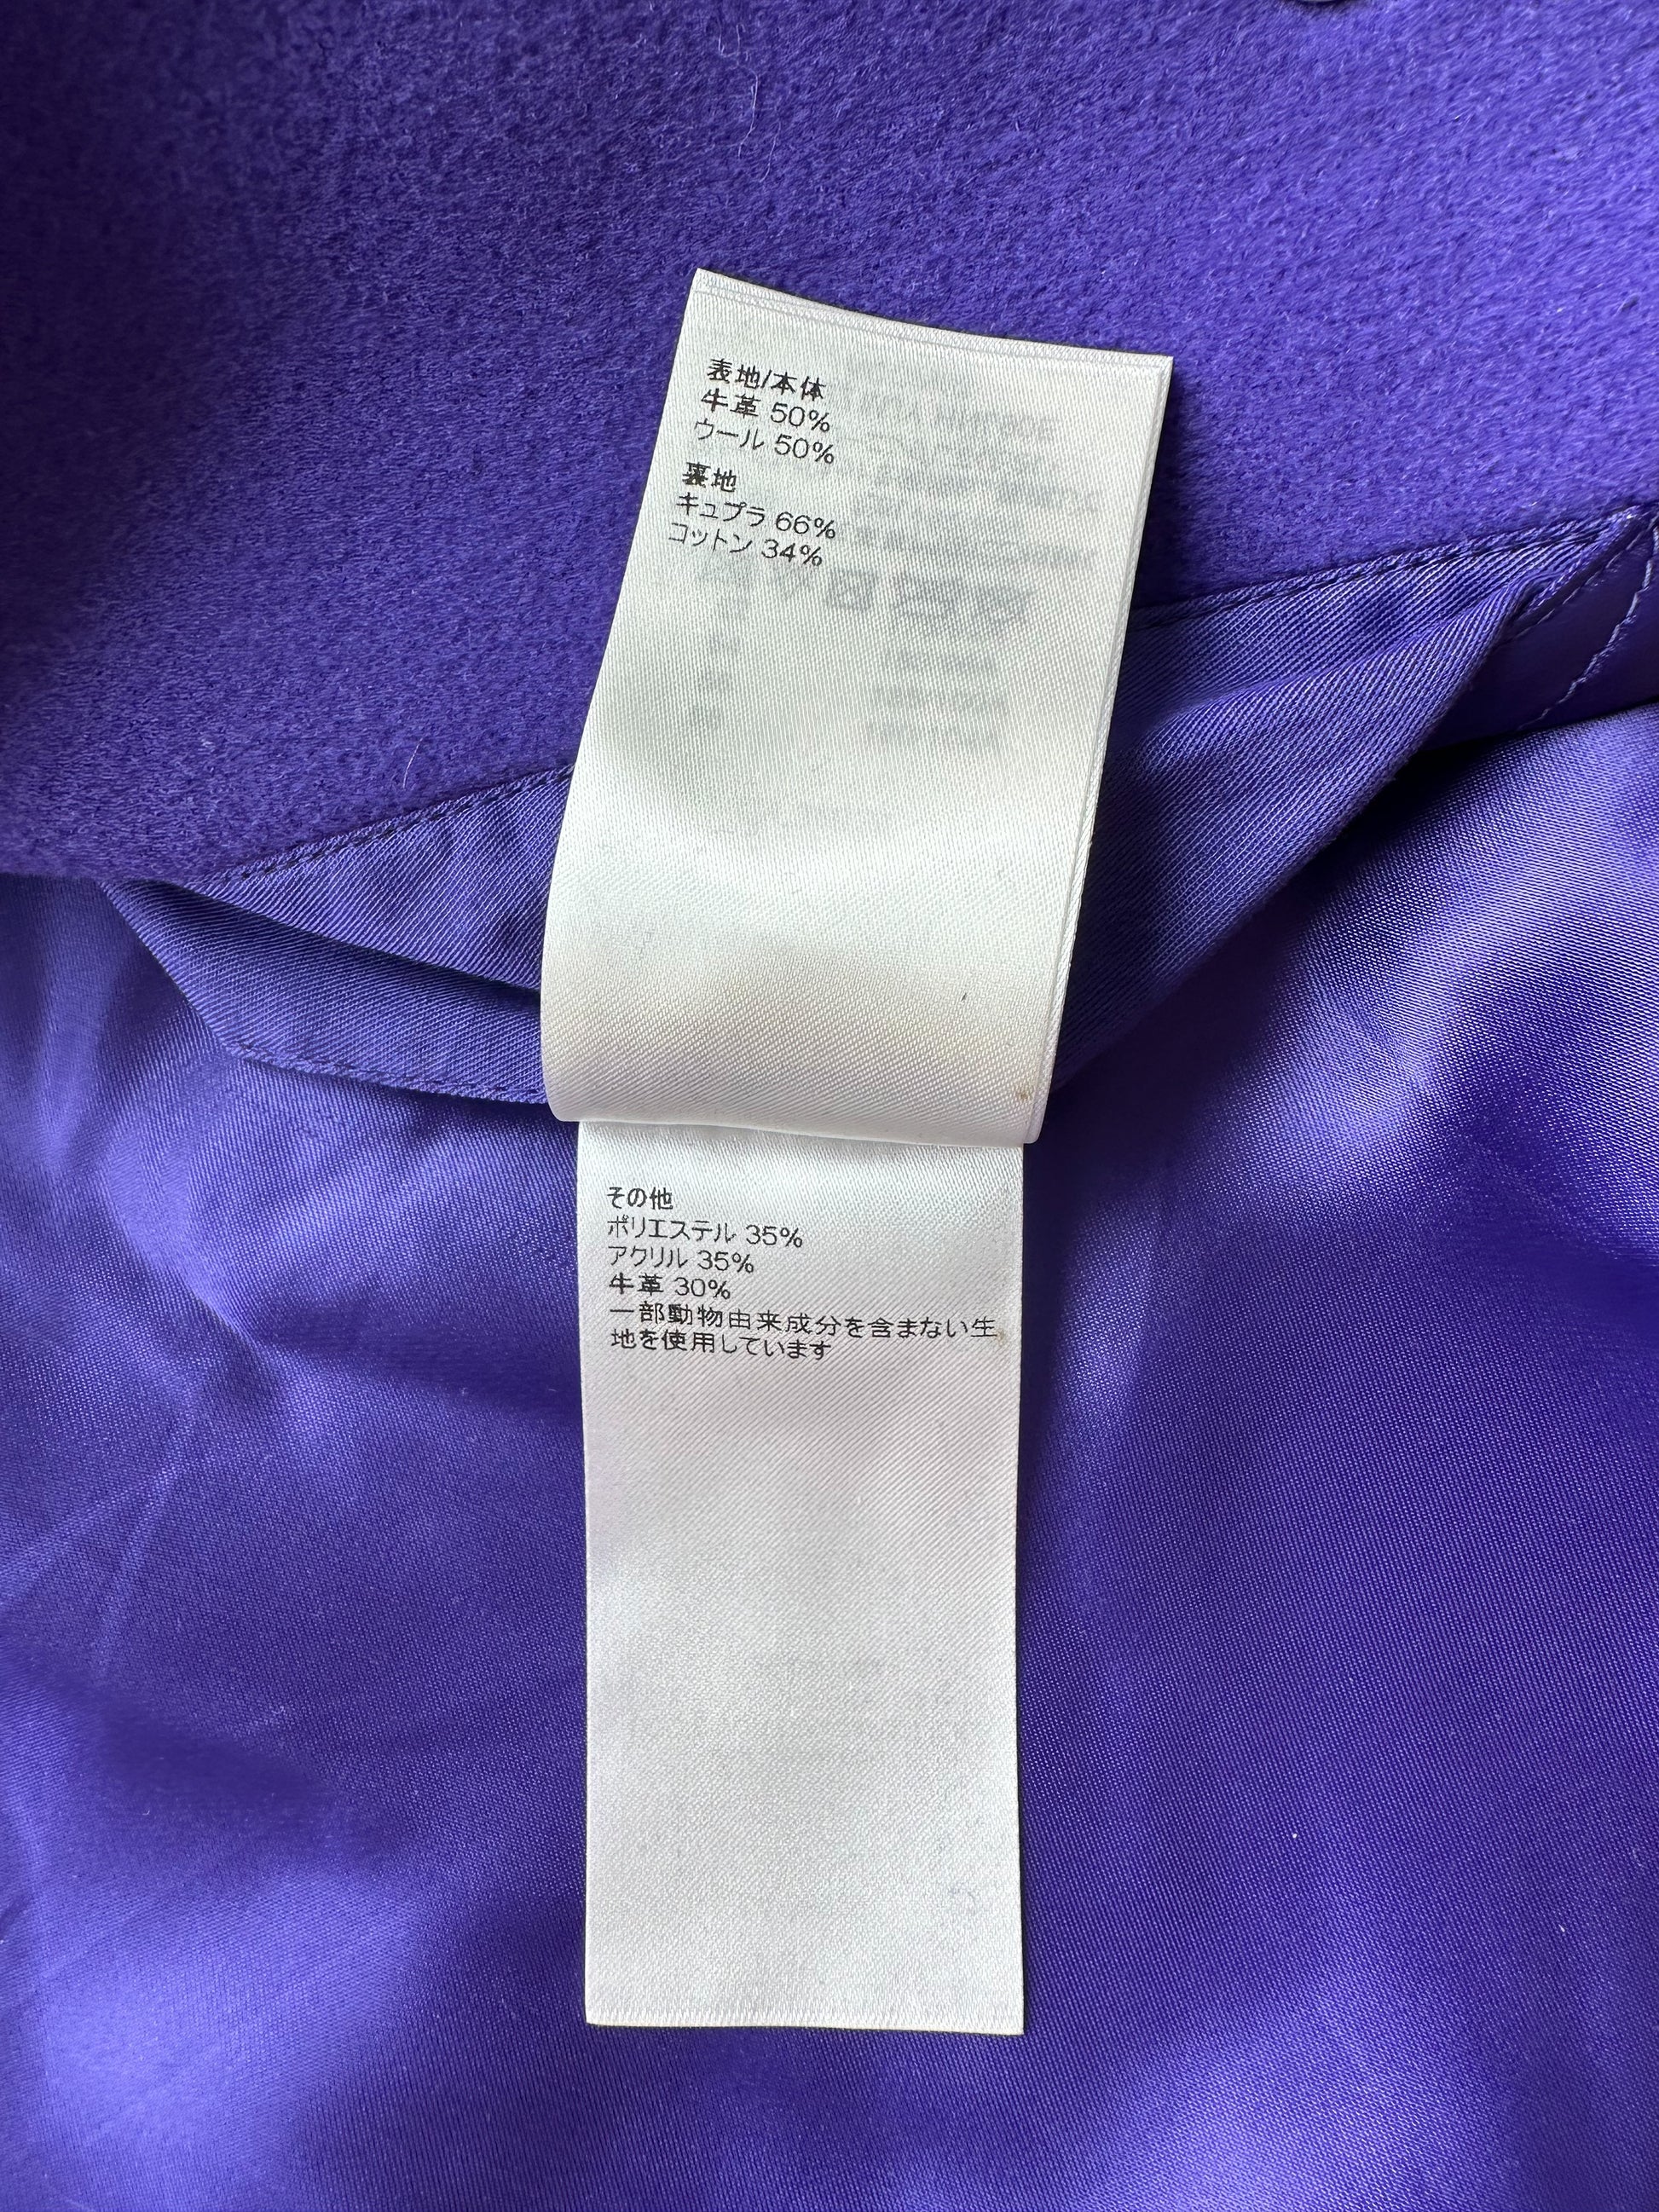 Purple/White Louis Vuitton Varsity Jacket - Jackets Expert